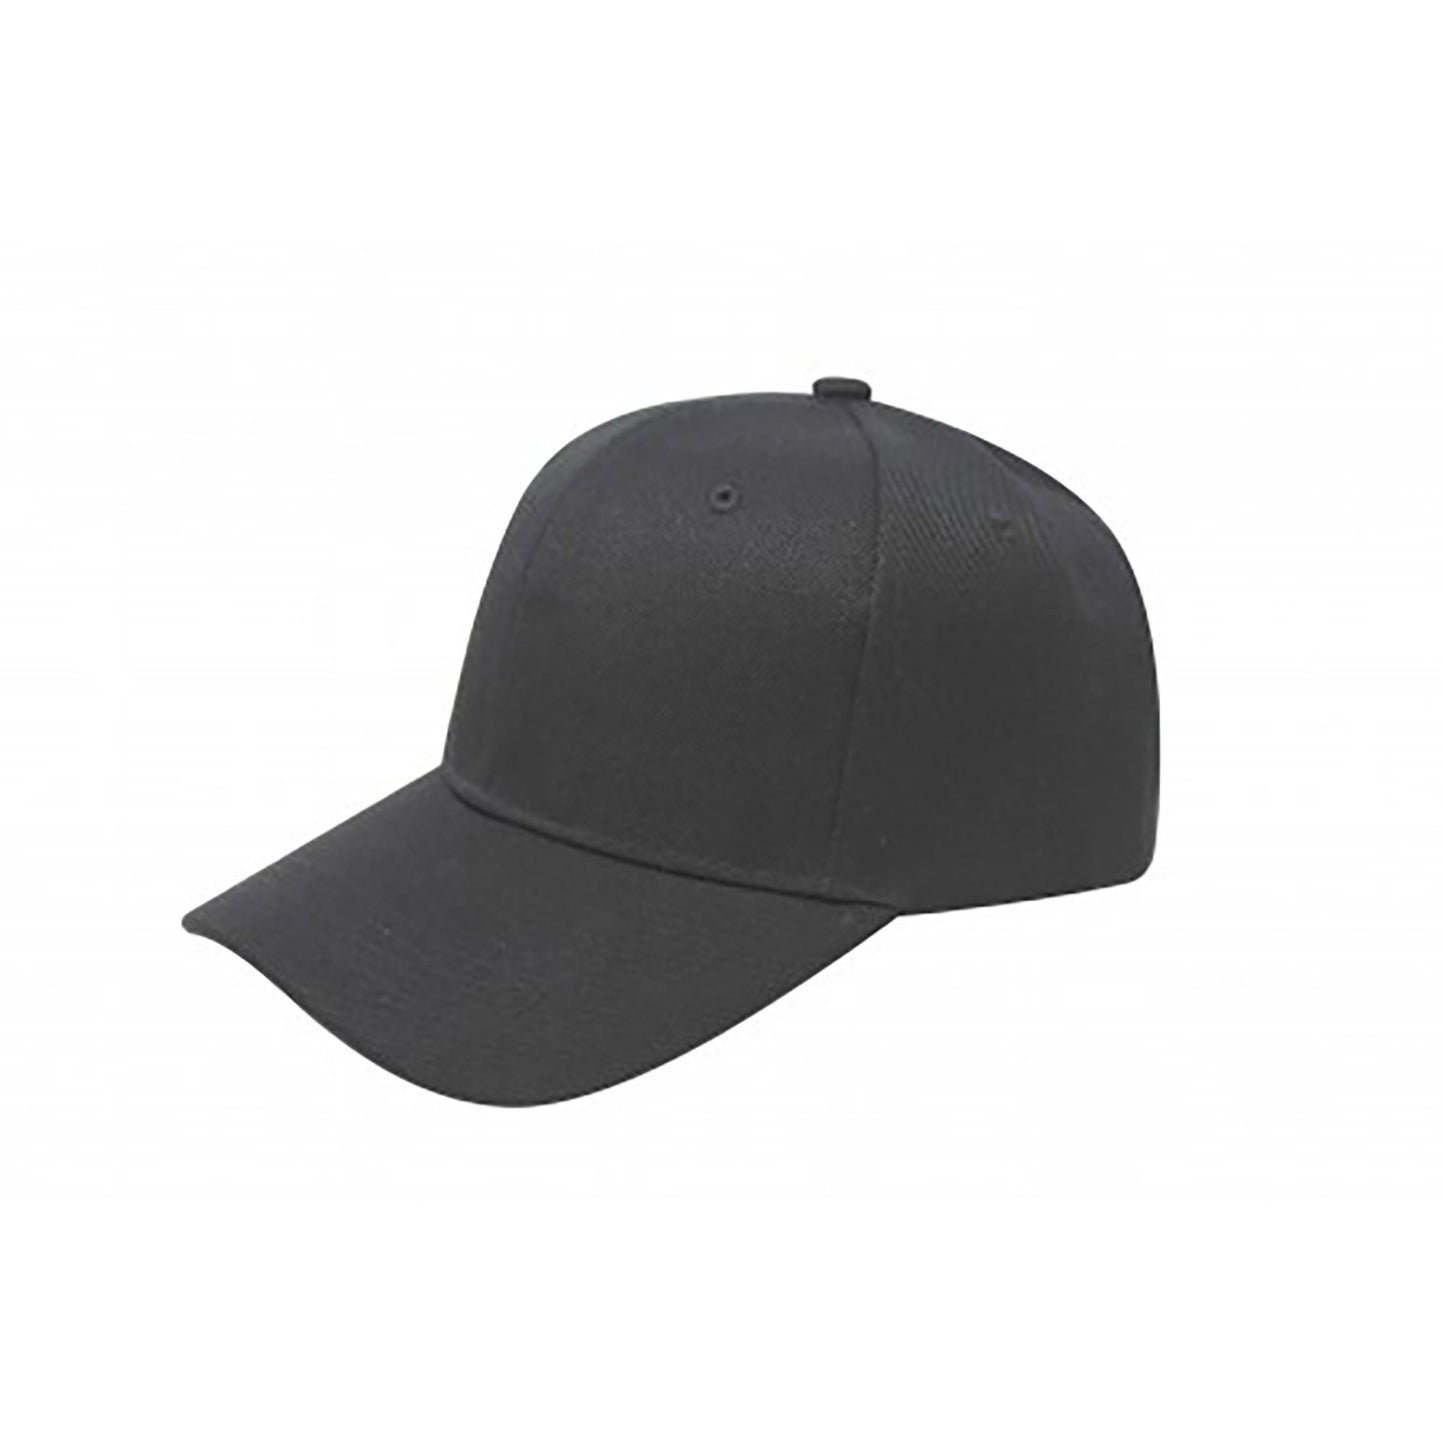 Baseball Caps Black 3 Pack  Accessories